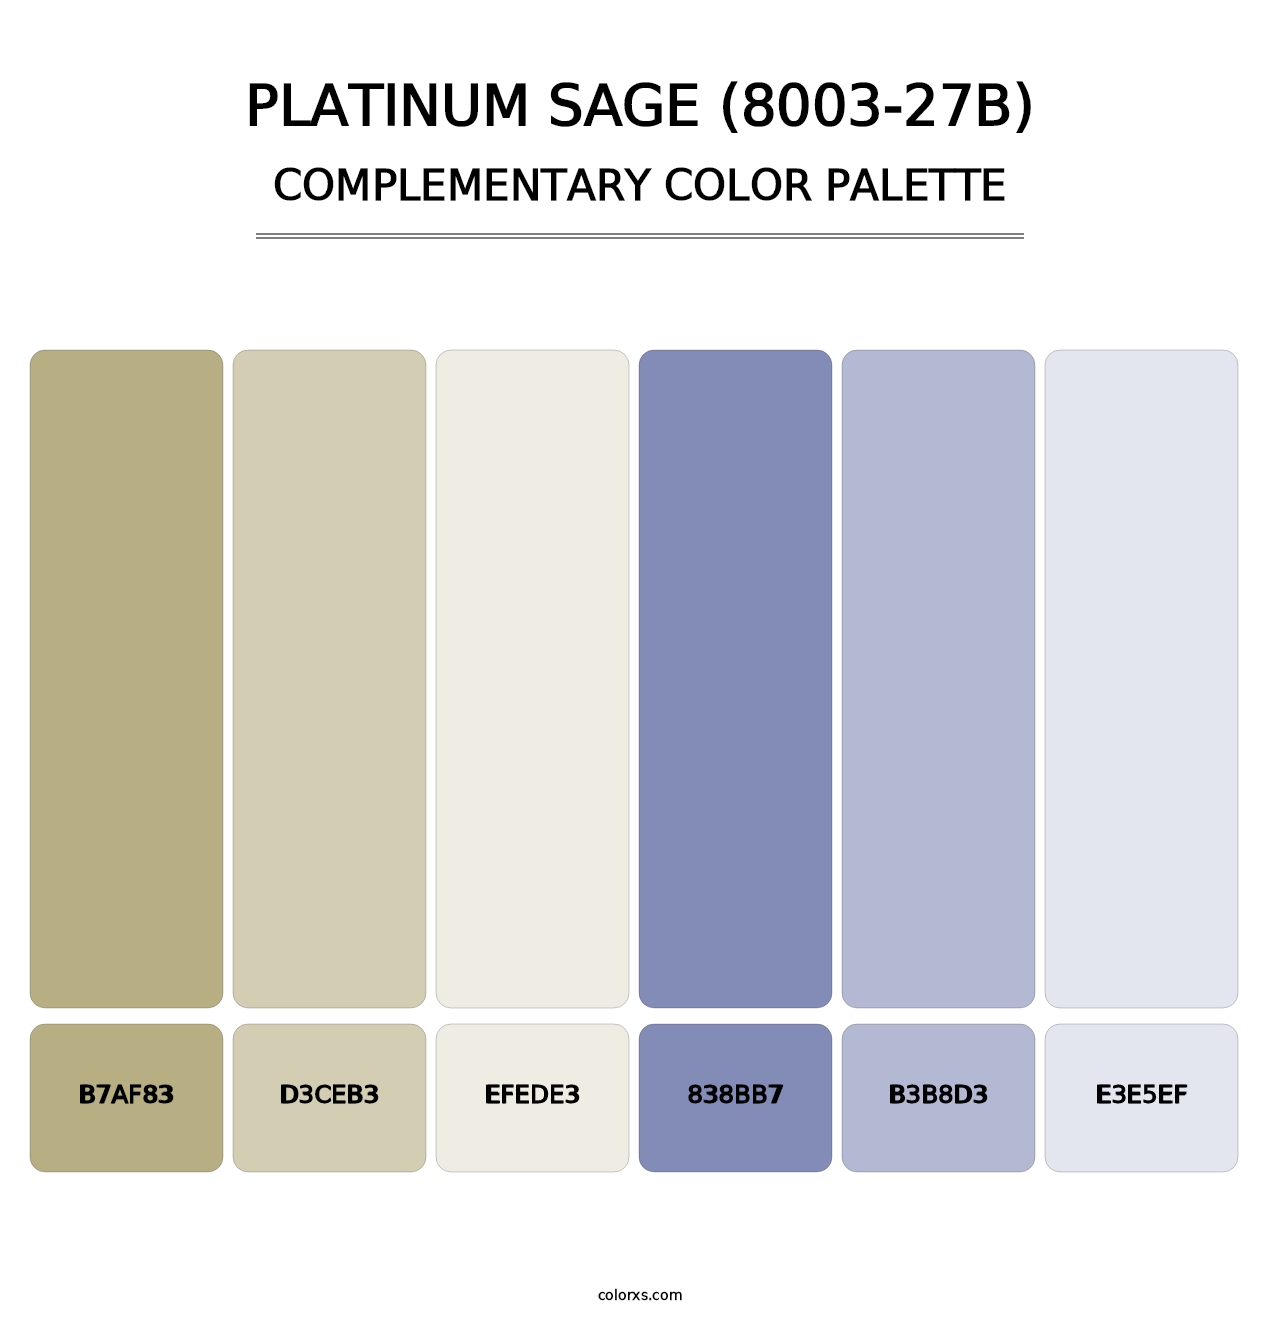 Platinum Sage (8003-27B) - Complementary Color Palette